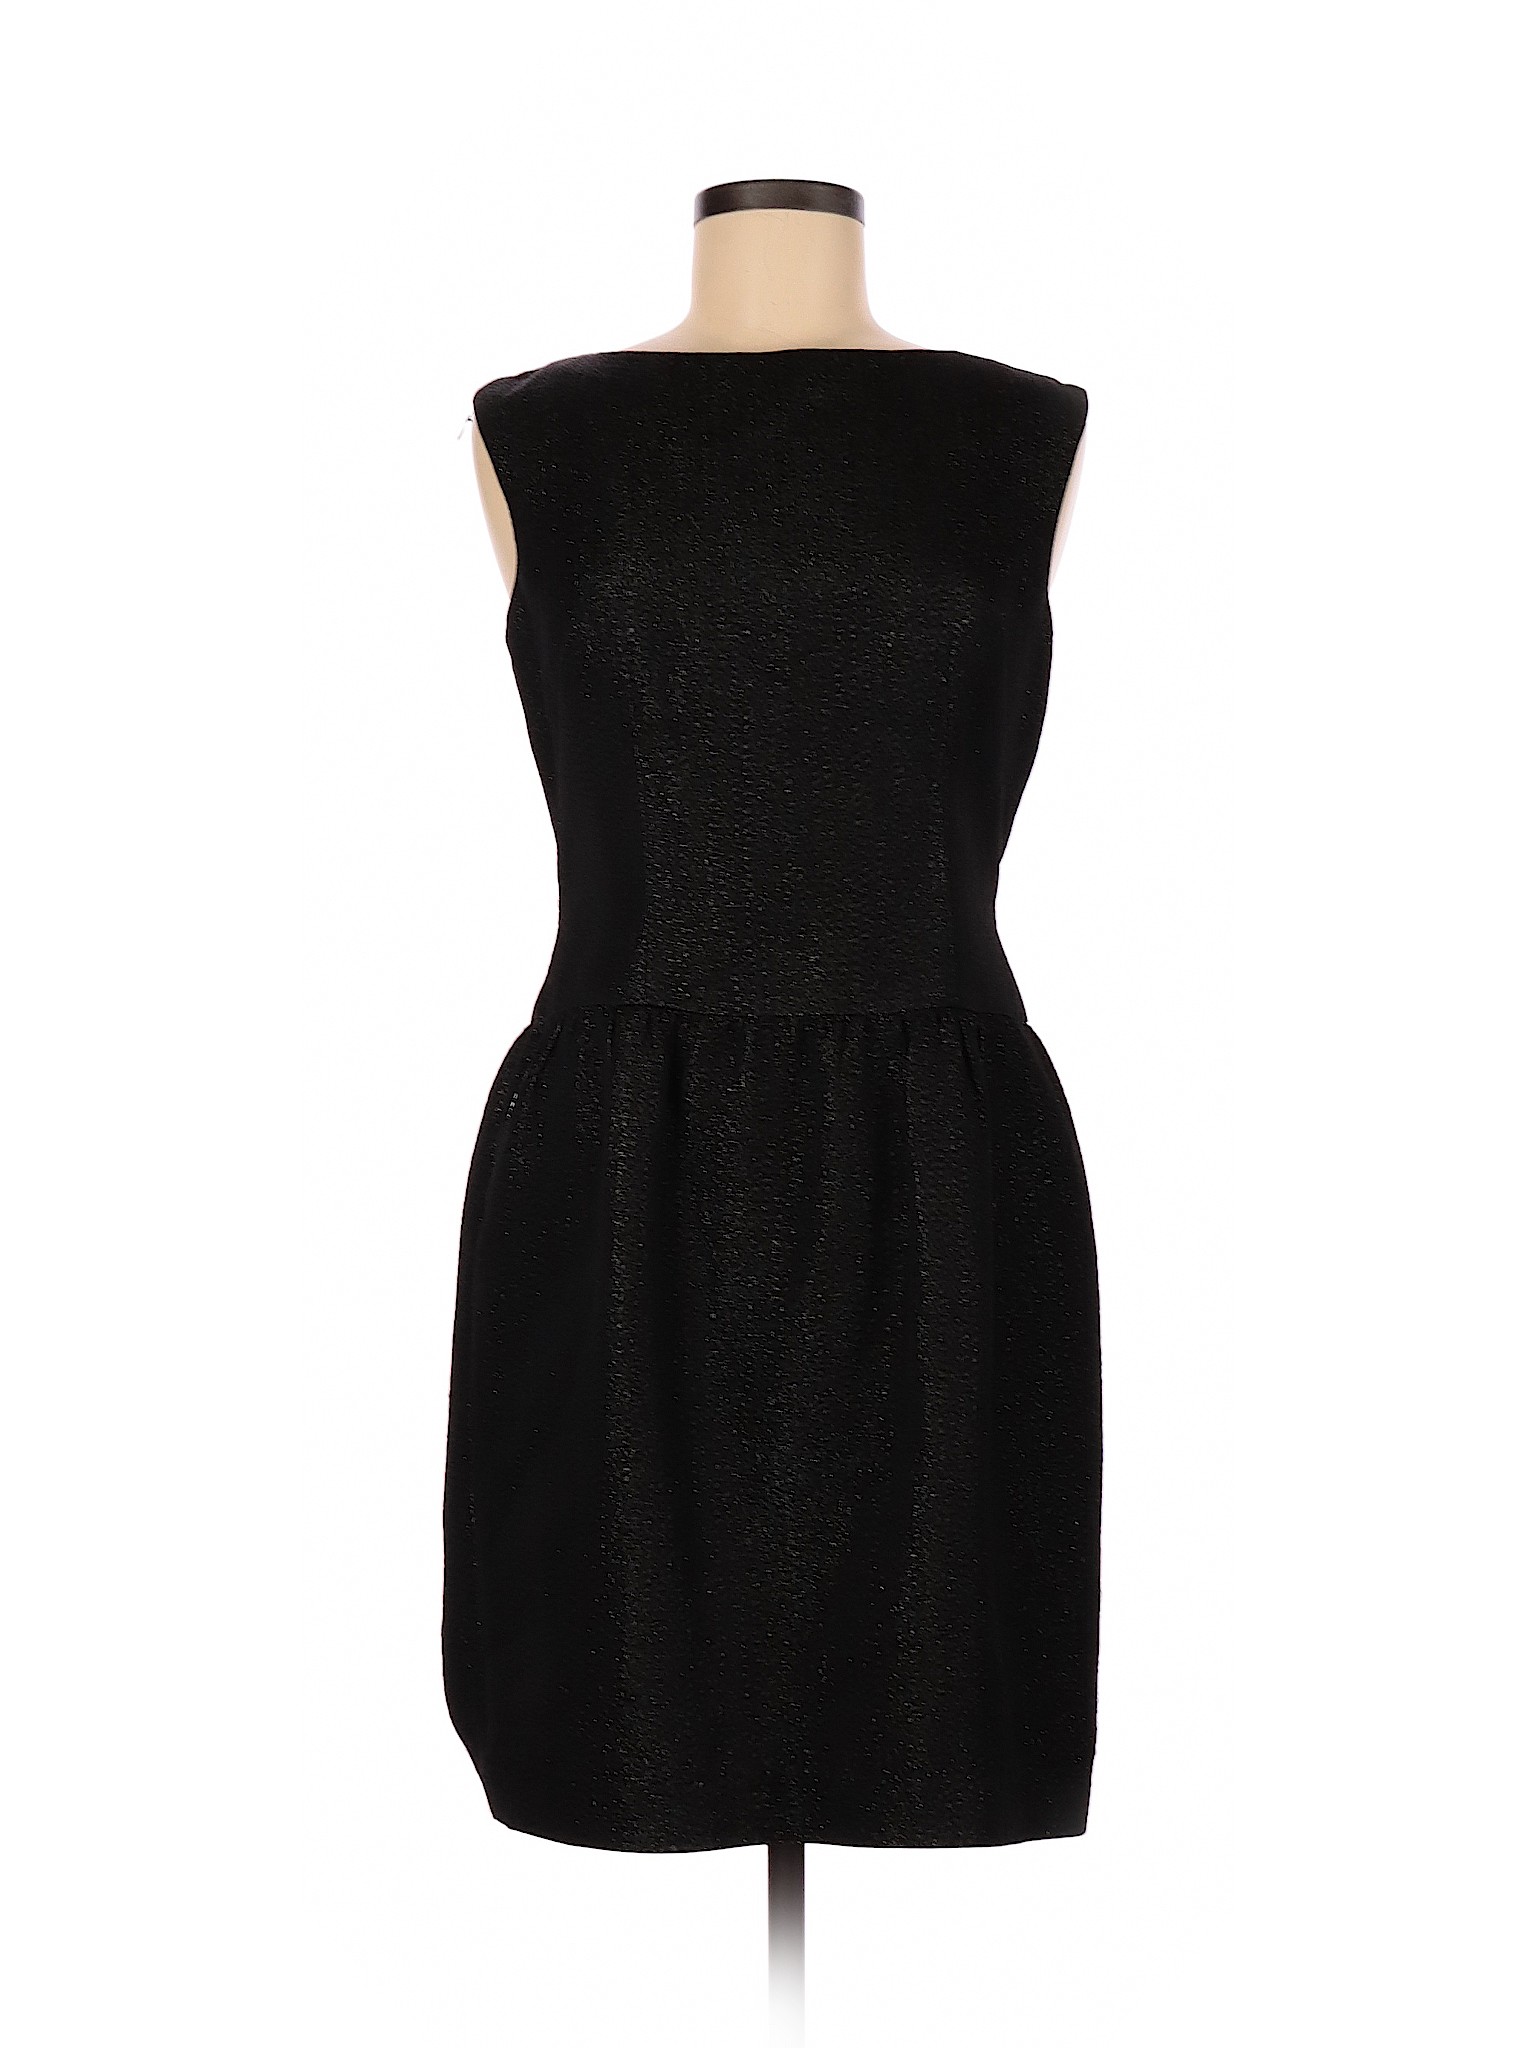 An original MILLY of New York Women Black Cocktail Dress 6 | eBay